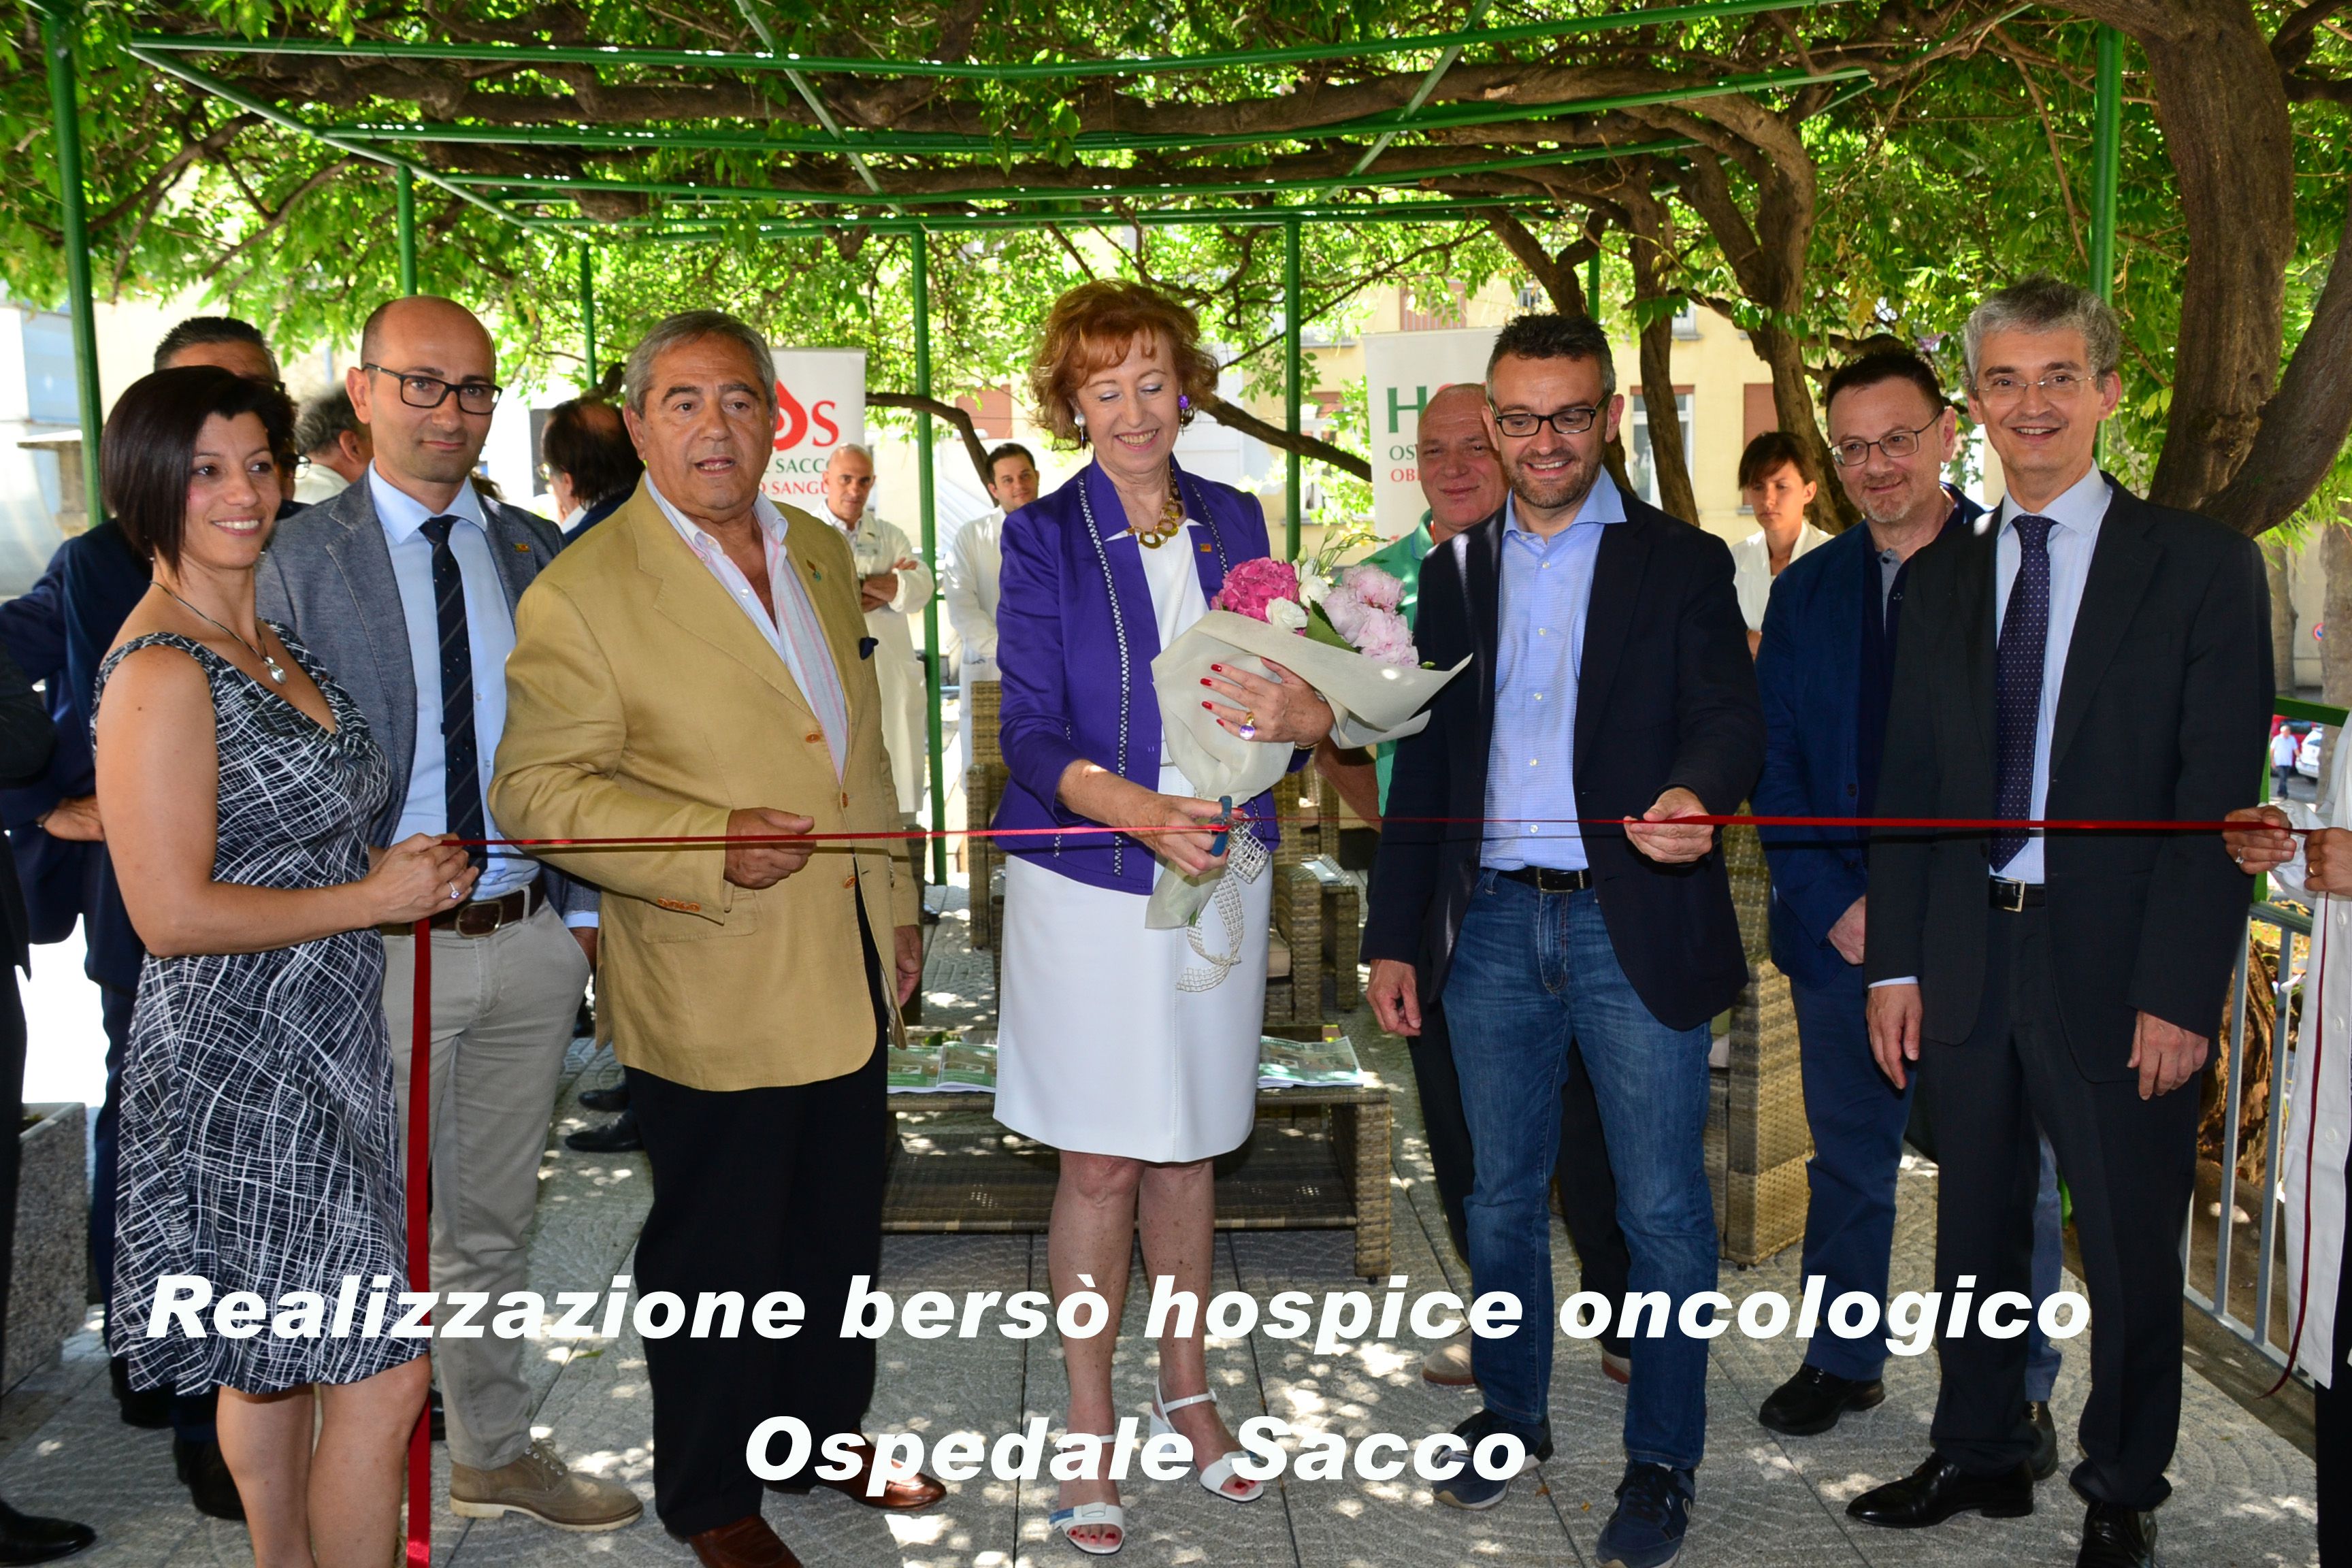 Bersò hospice Sacco_01